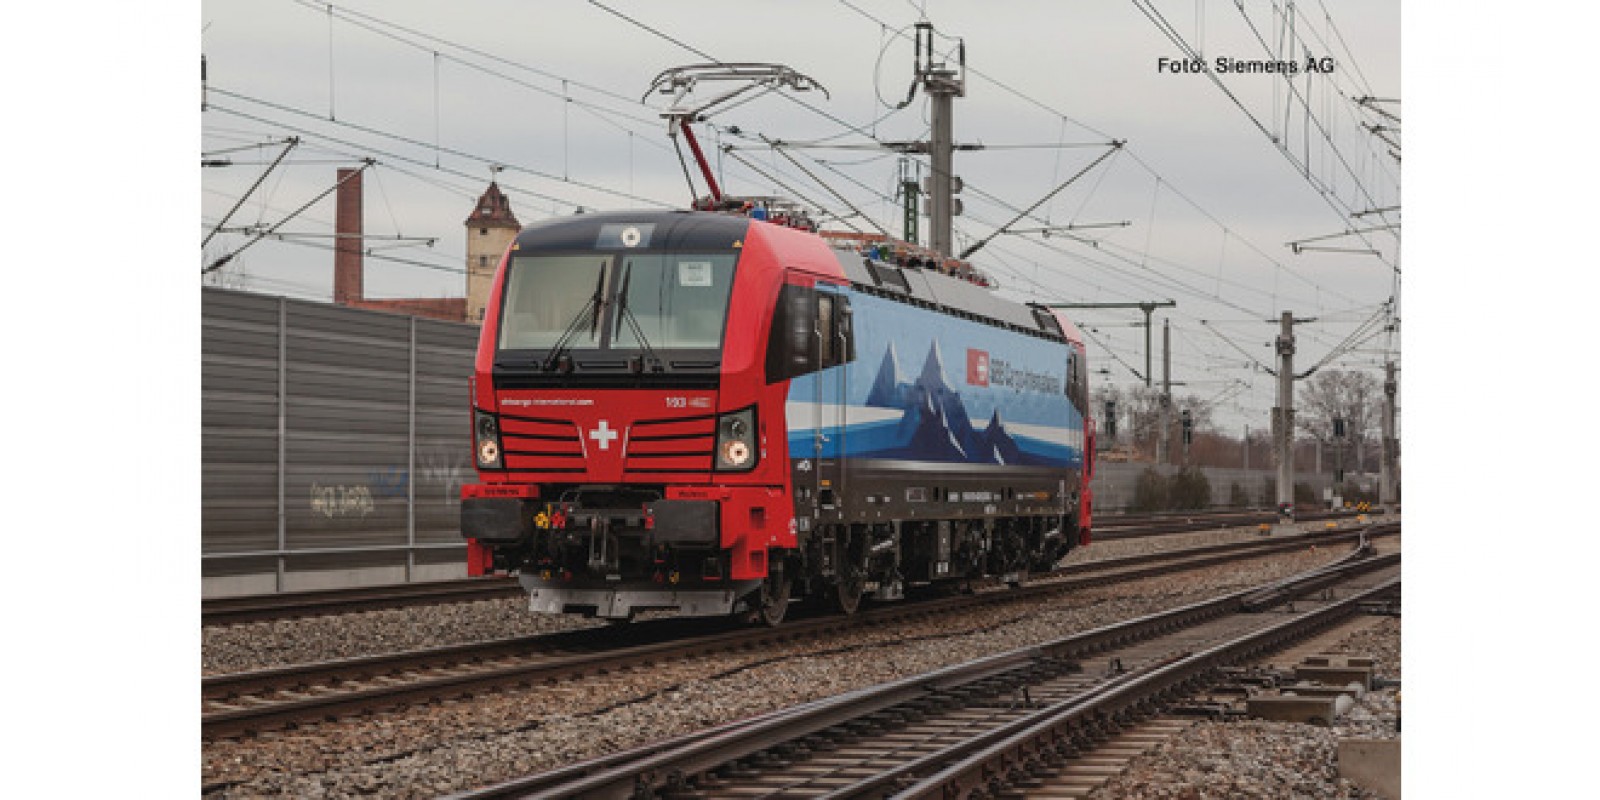 RO73956 - Electric locomotive 193 478, SBB